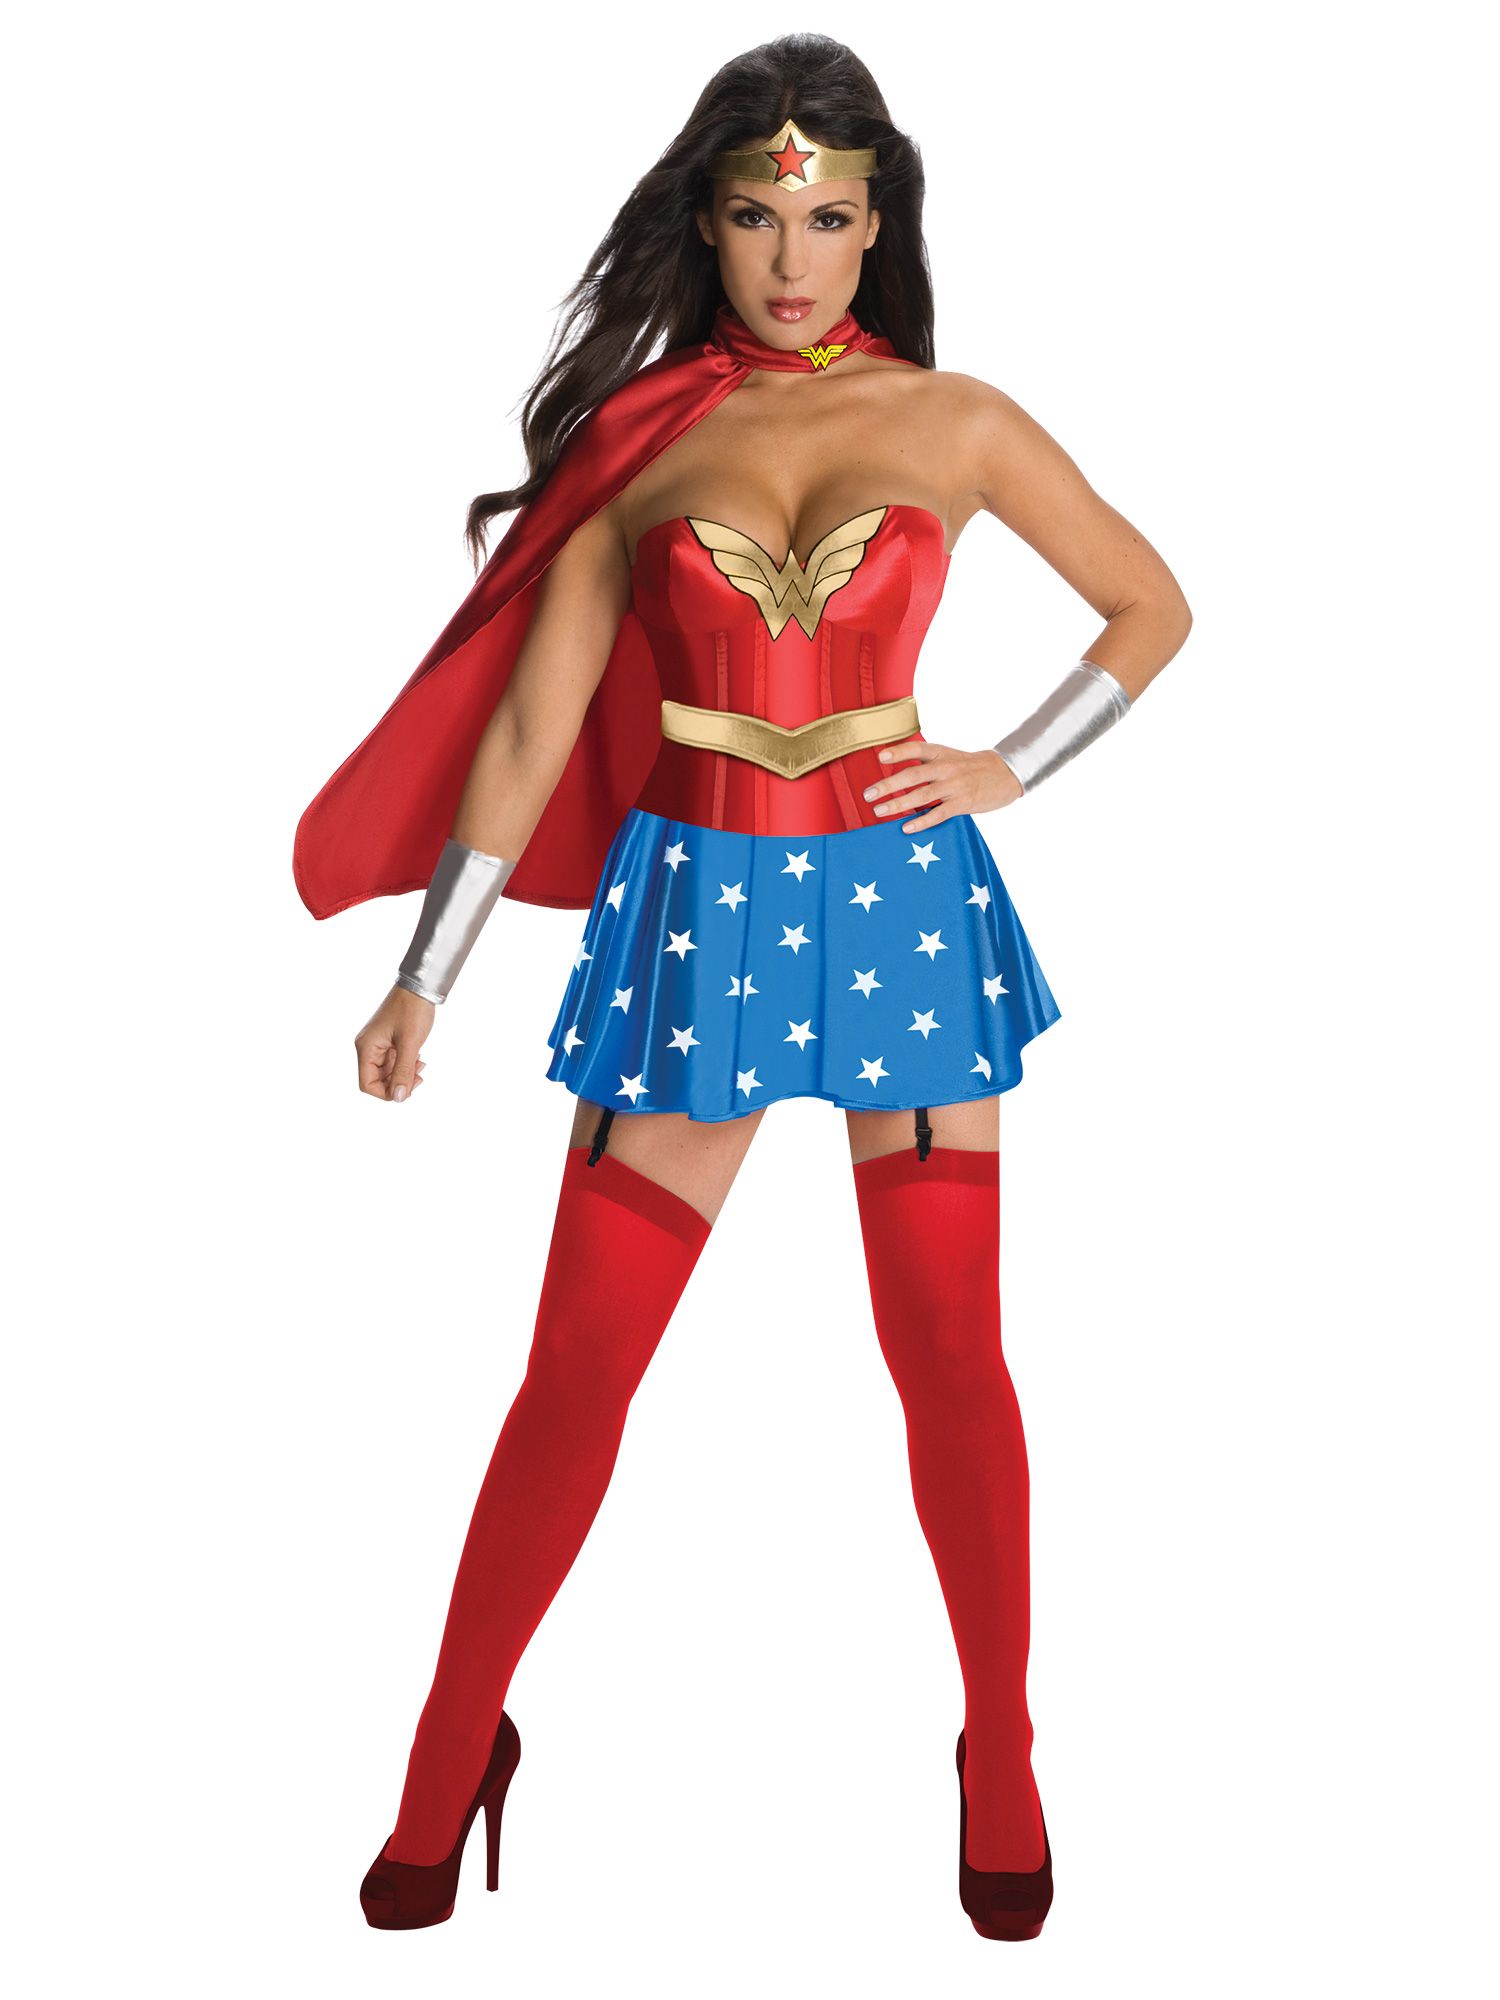 Sexy Wonder Woman Costume - image 1 of 2